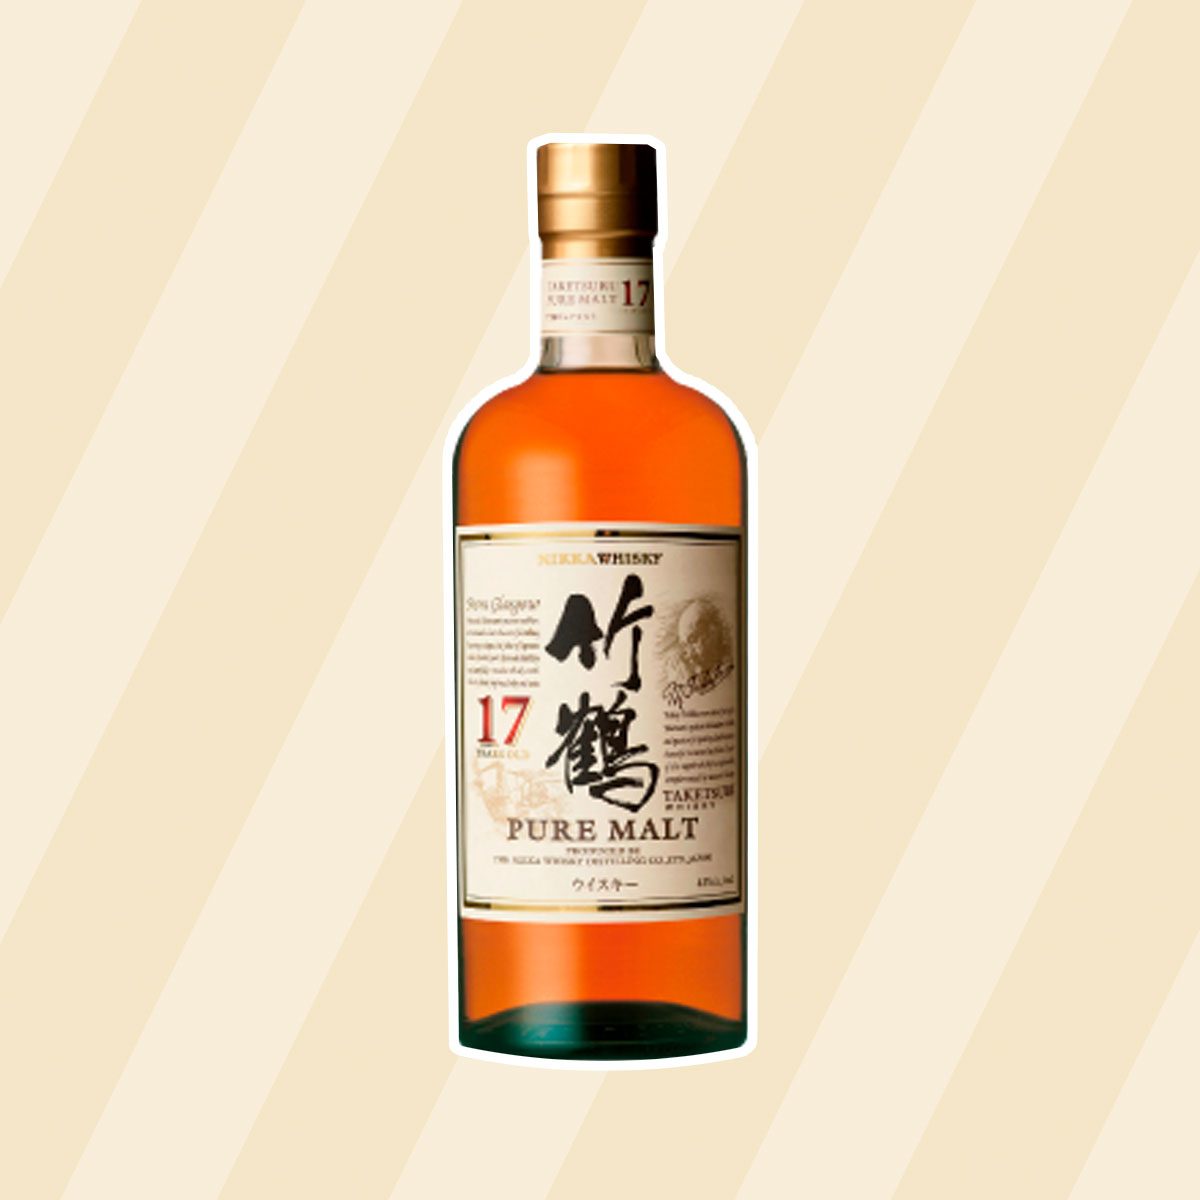 The Best Japanese Whisky Brands To Splurge On